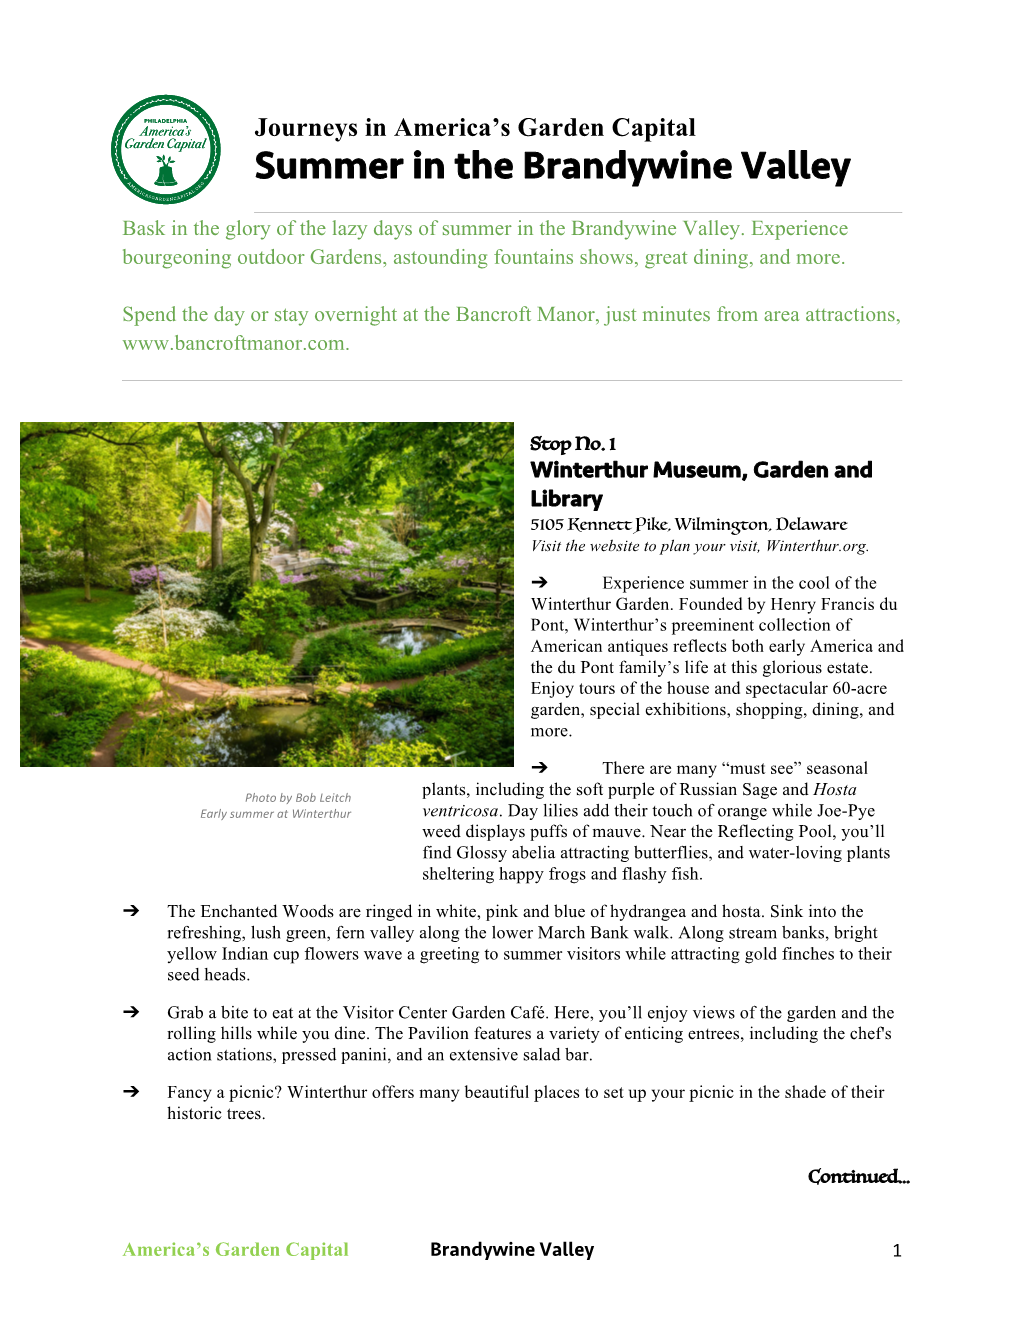 Summer in the Brandywine Valley